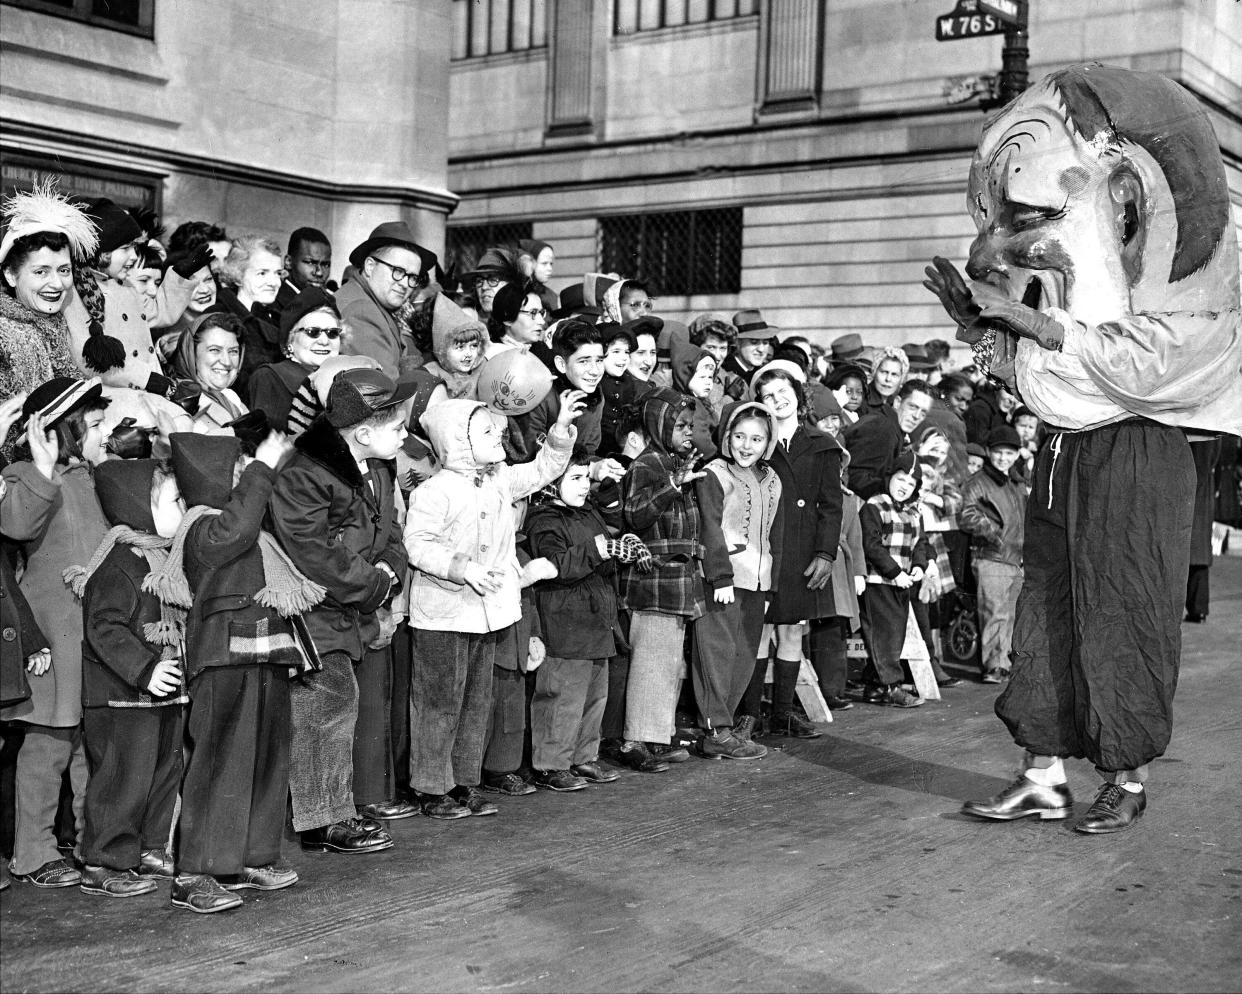 A clown greeting kids along Central Park West